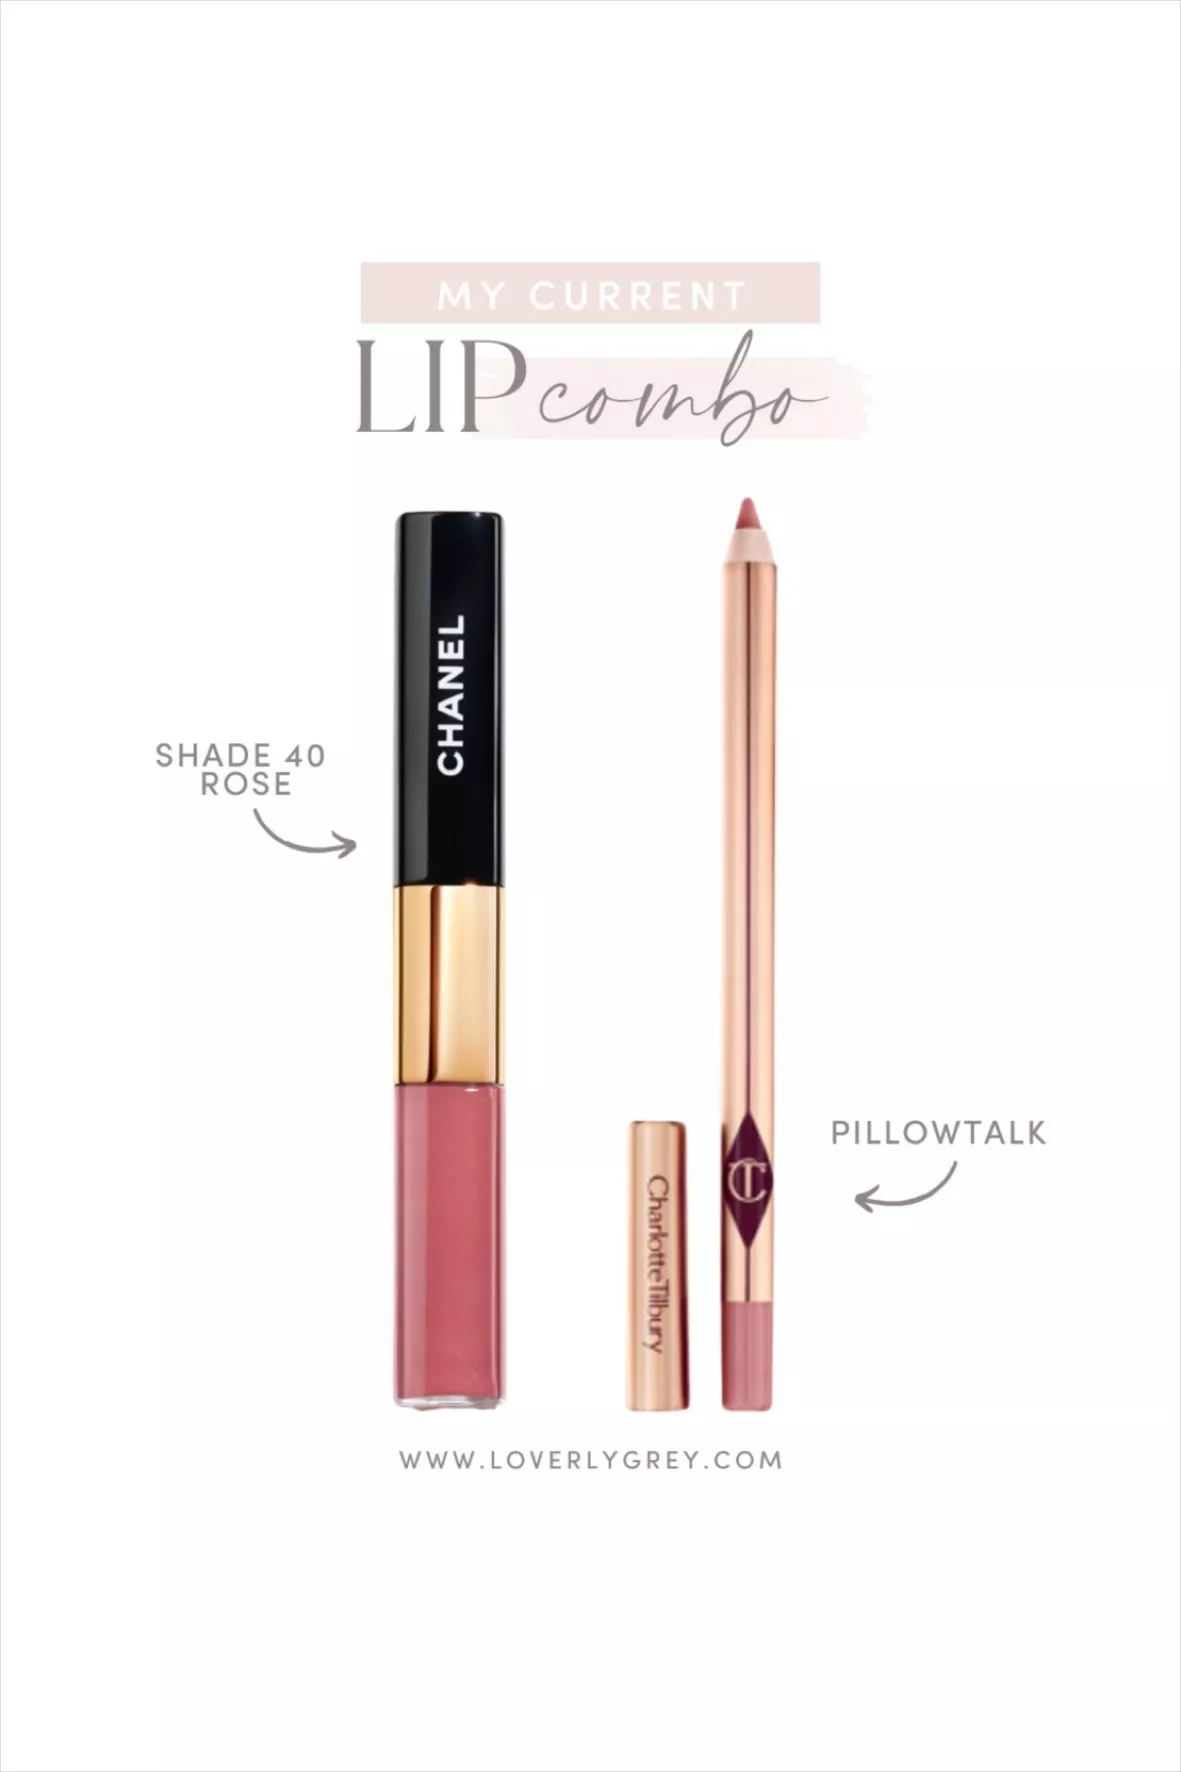 LE ROUGE DUO ULTRA TENUE Ultra wear liquid lip colour 57 - Darling pink